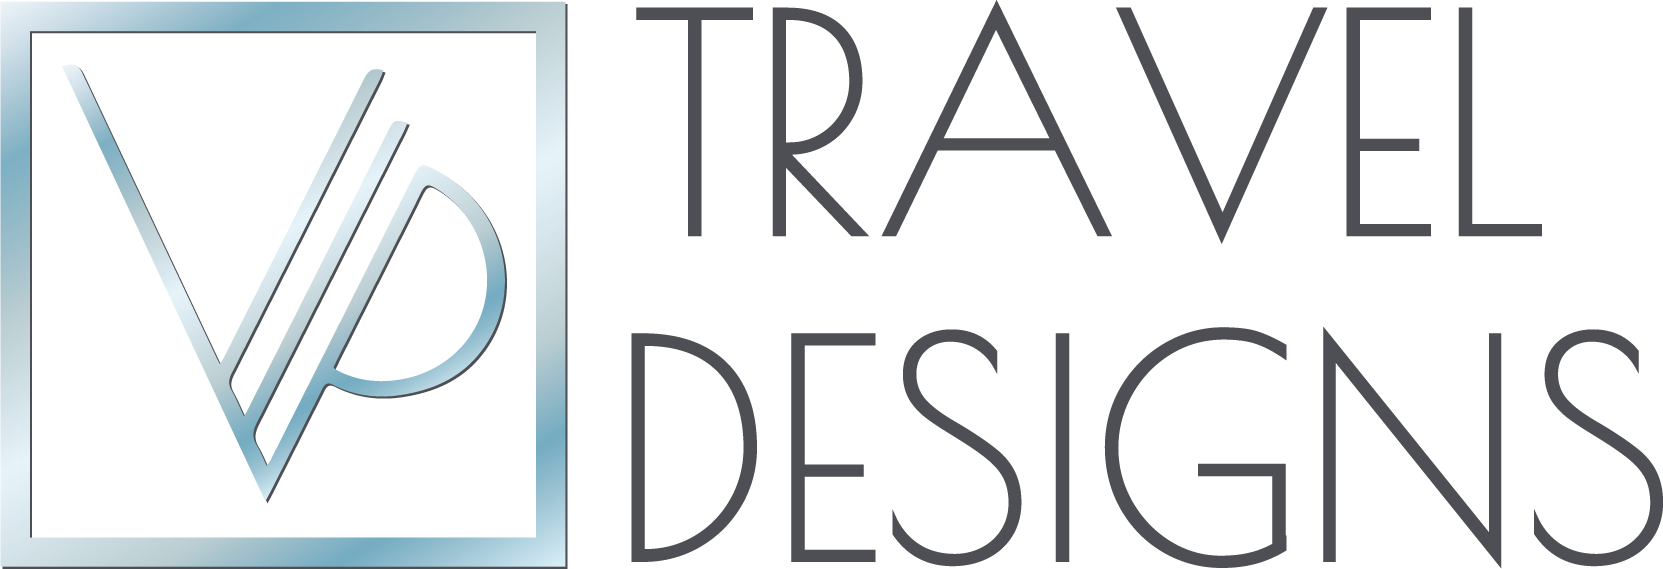 VIP Travel Designs logo